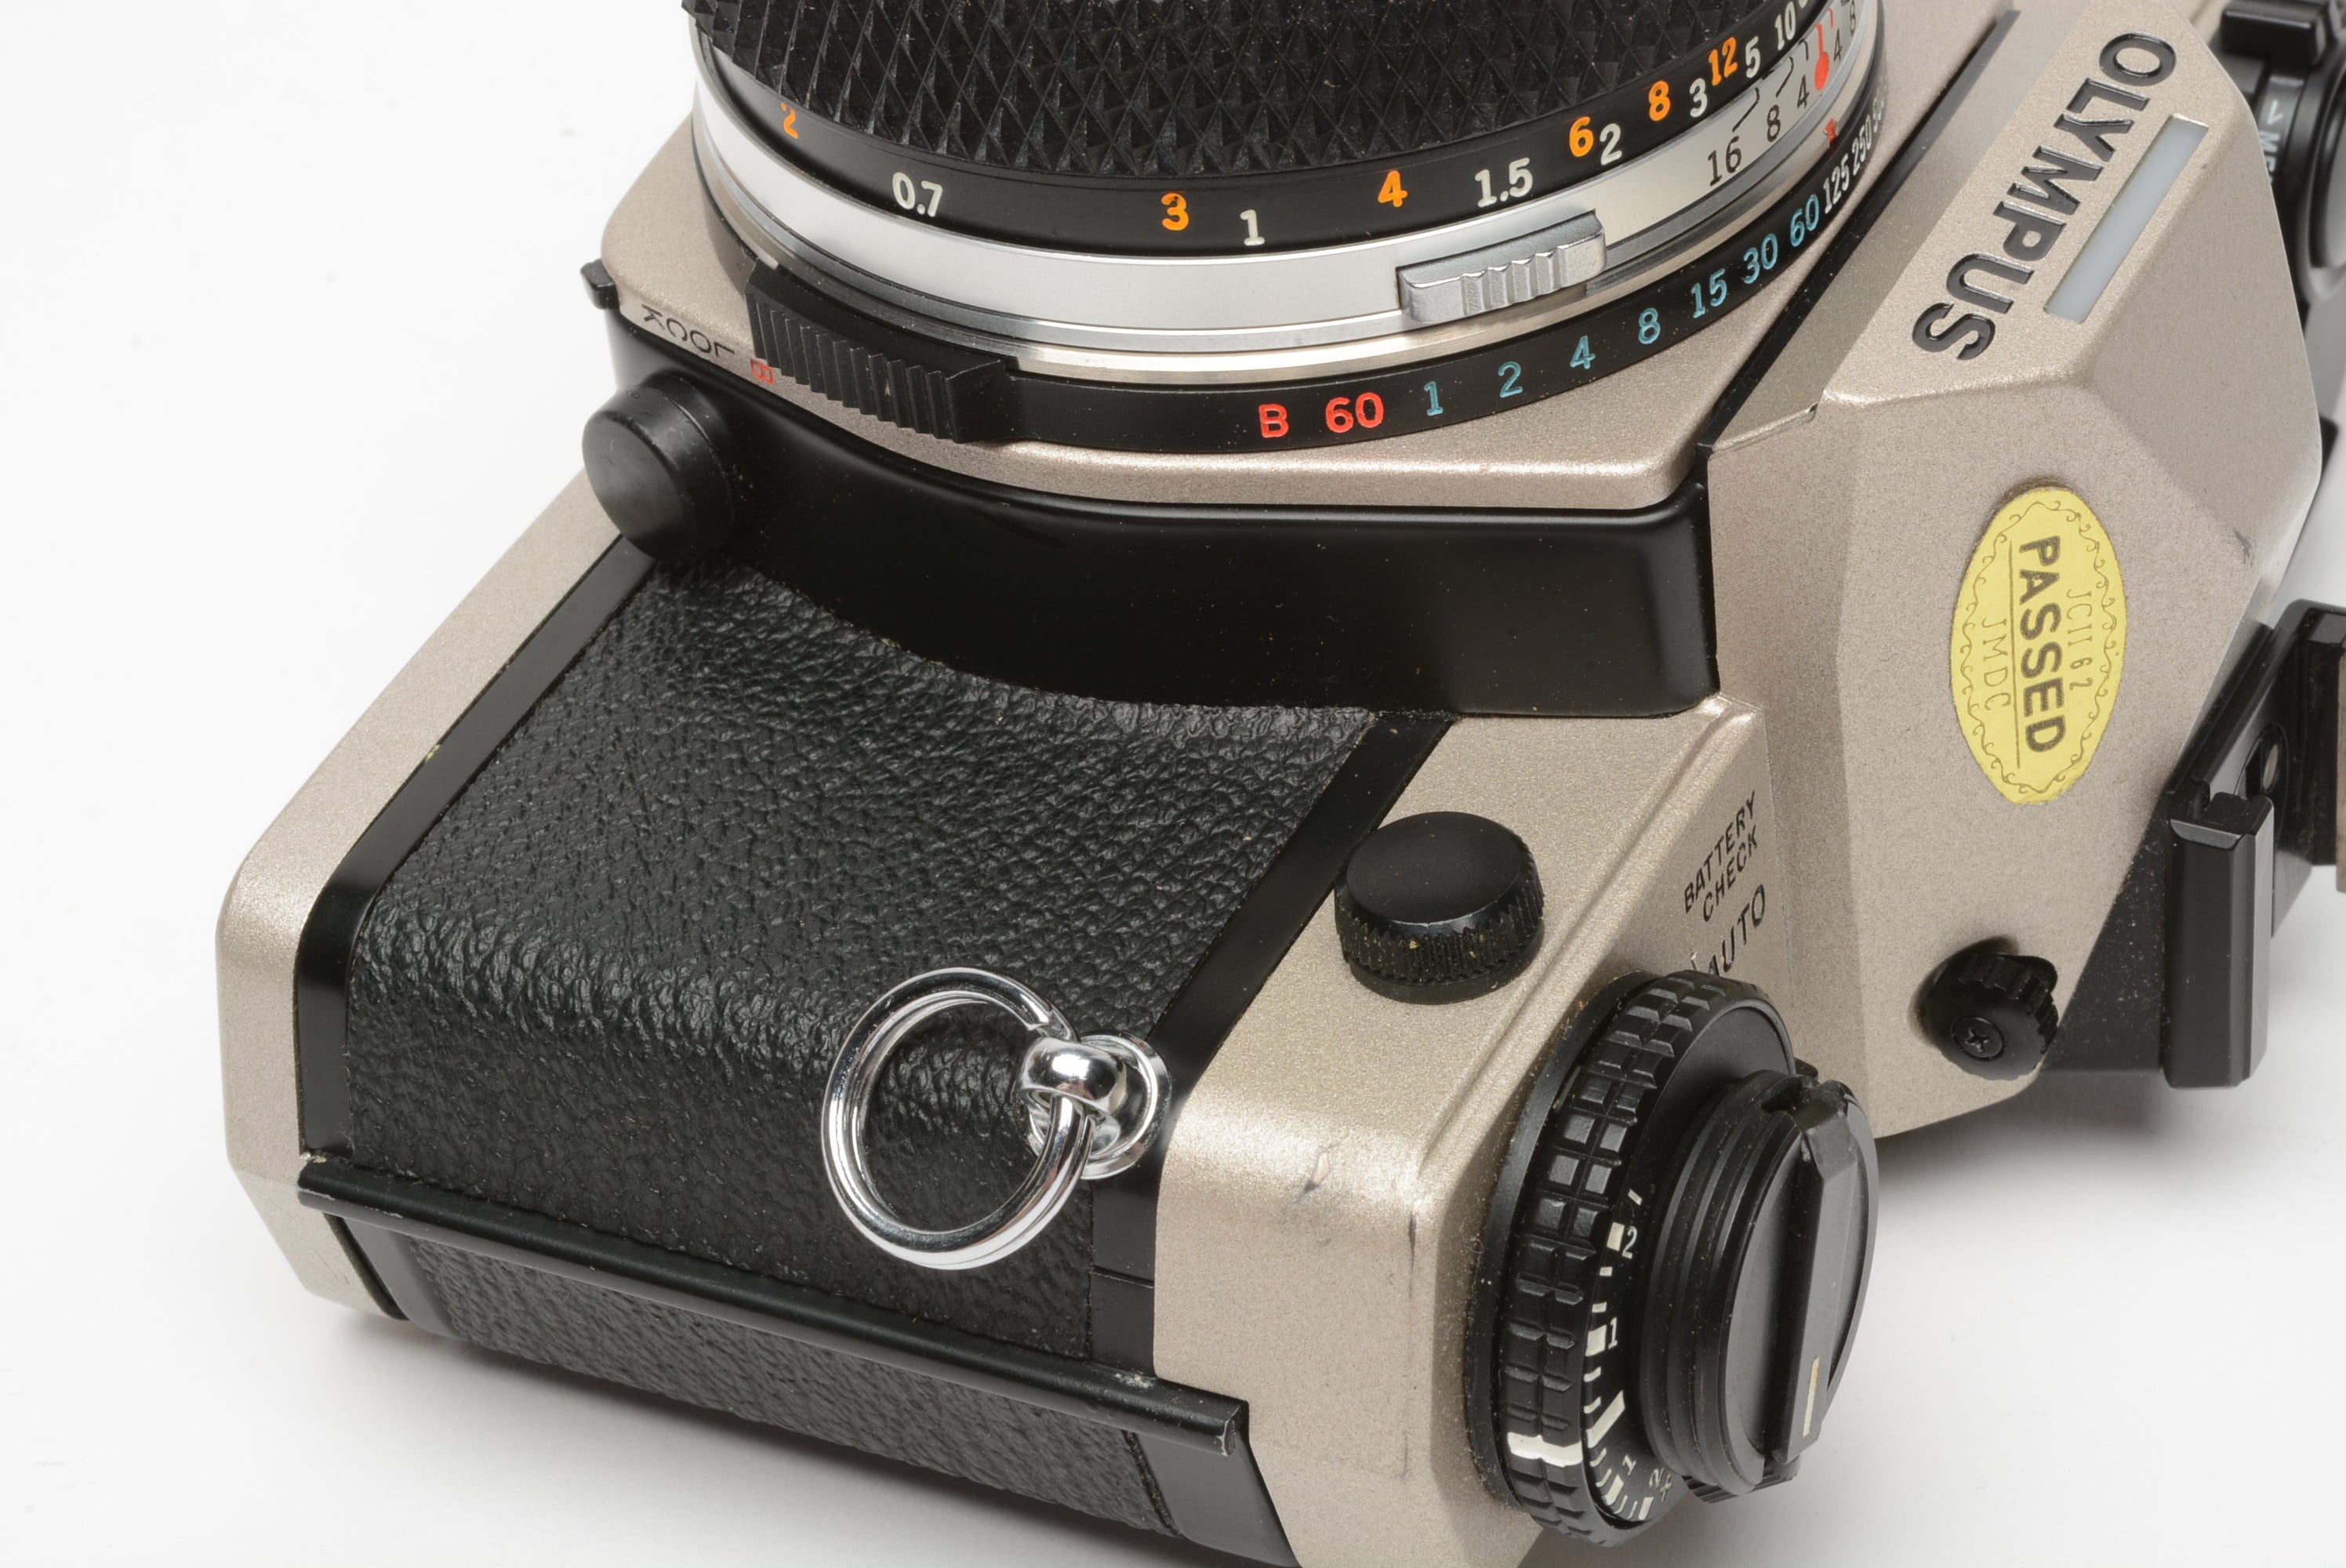 OLYMPUS OM-4T & F.ZUIKO 1.8 f=50mm - フィルムカメラ